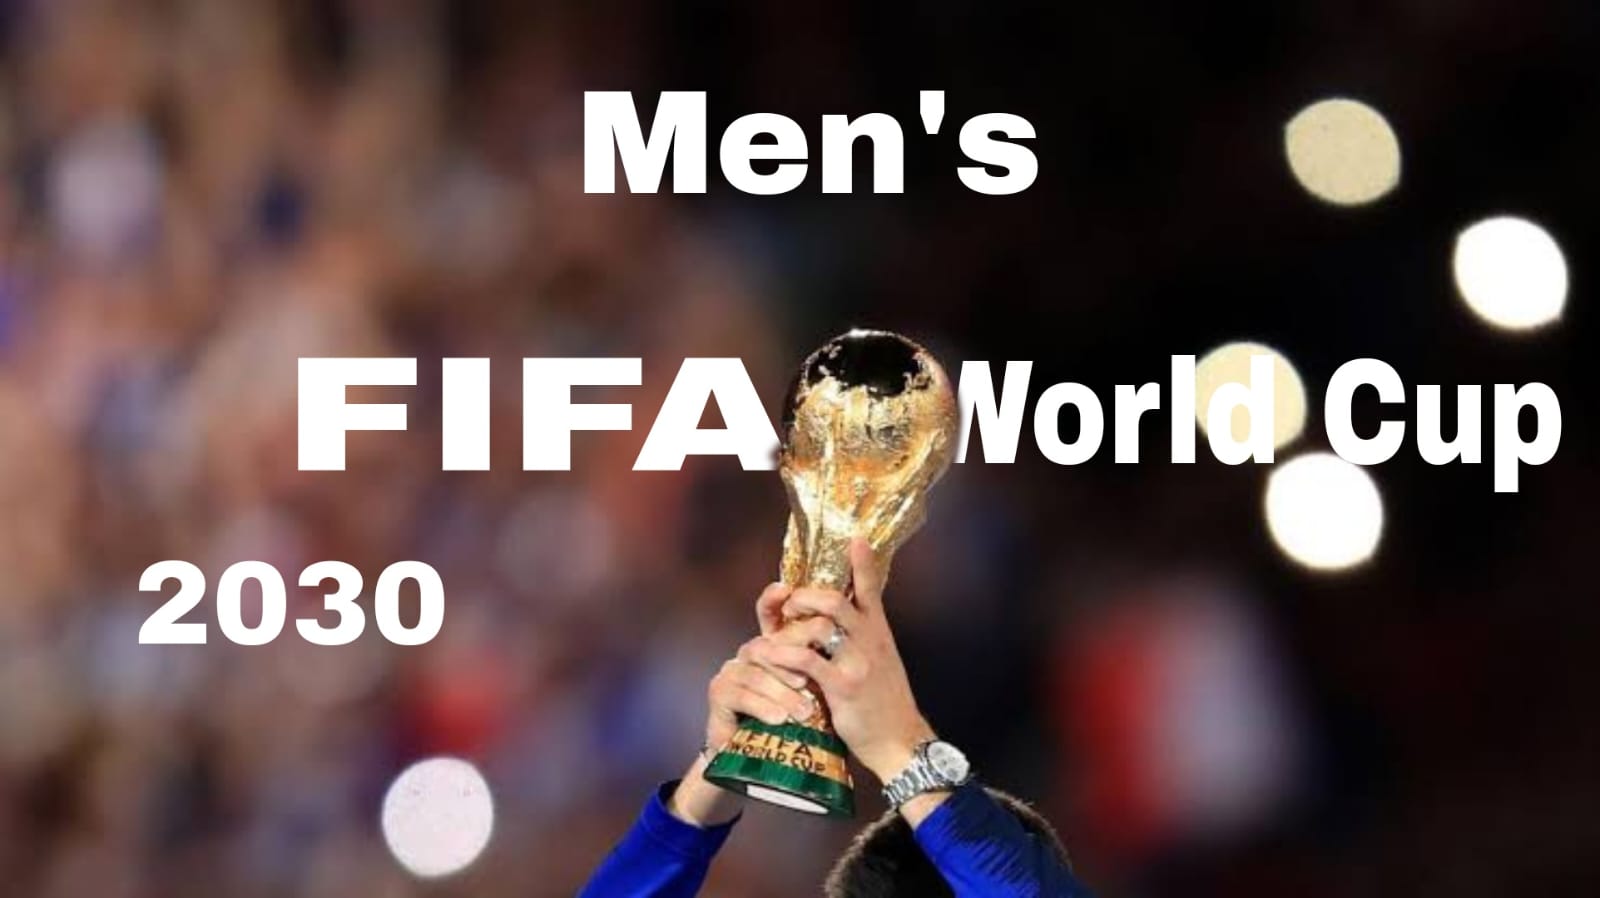 fifa world cup 2030